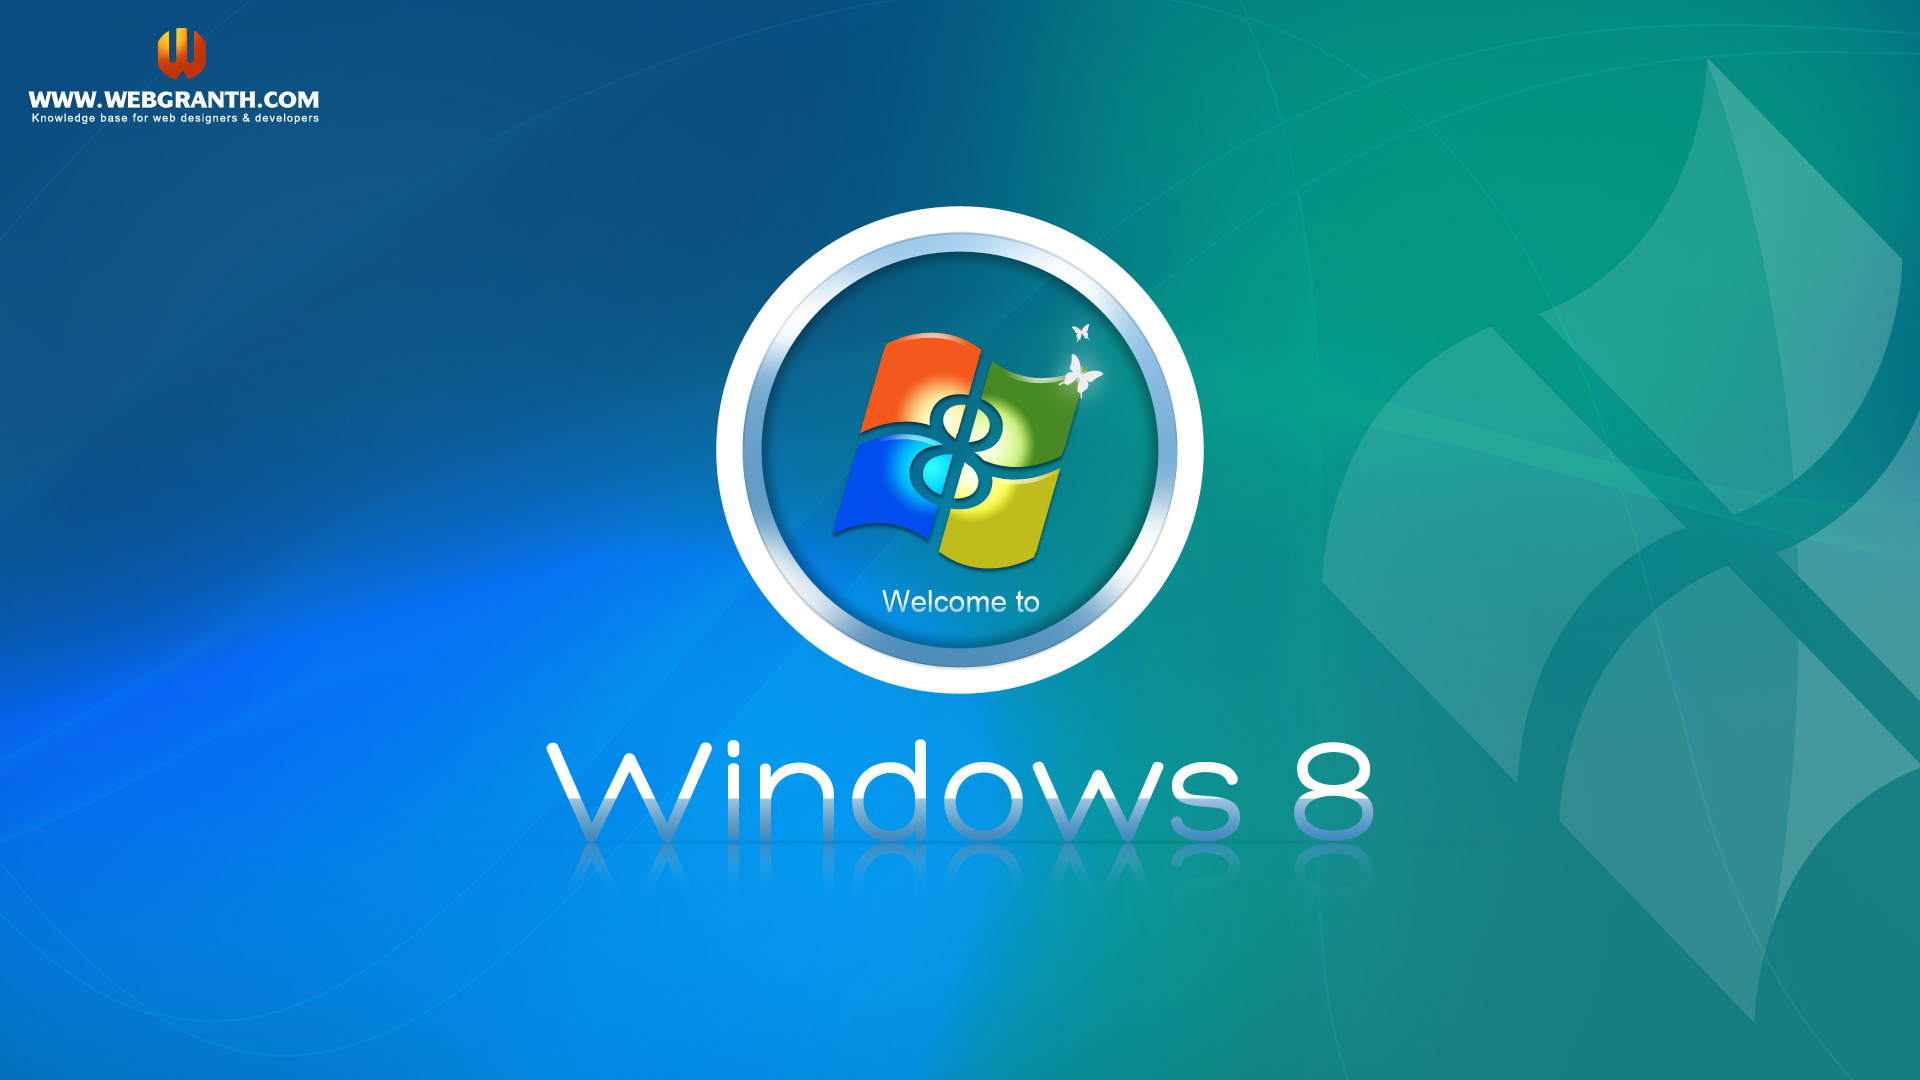 Windows 8 Wallpaper : Collection of Best Window 8 Wallpapers 2013 ...